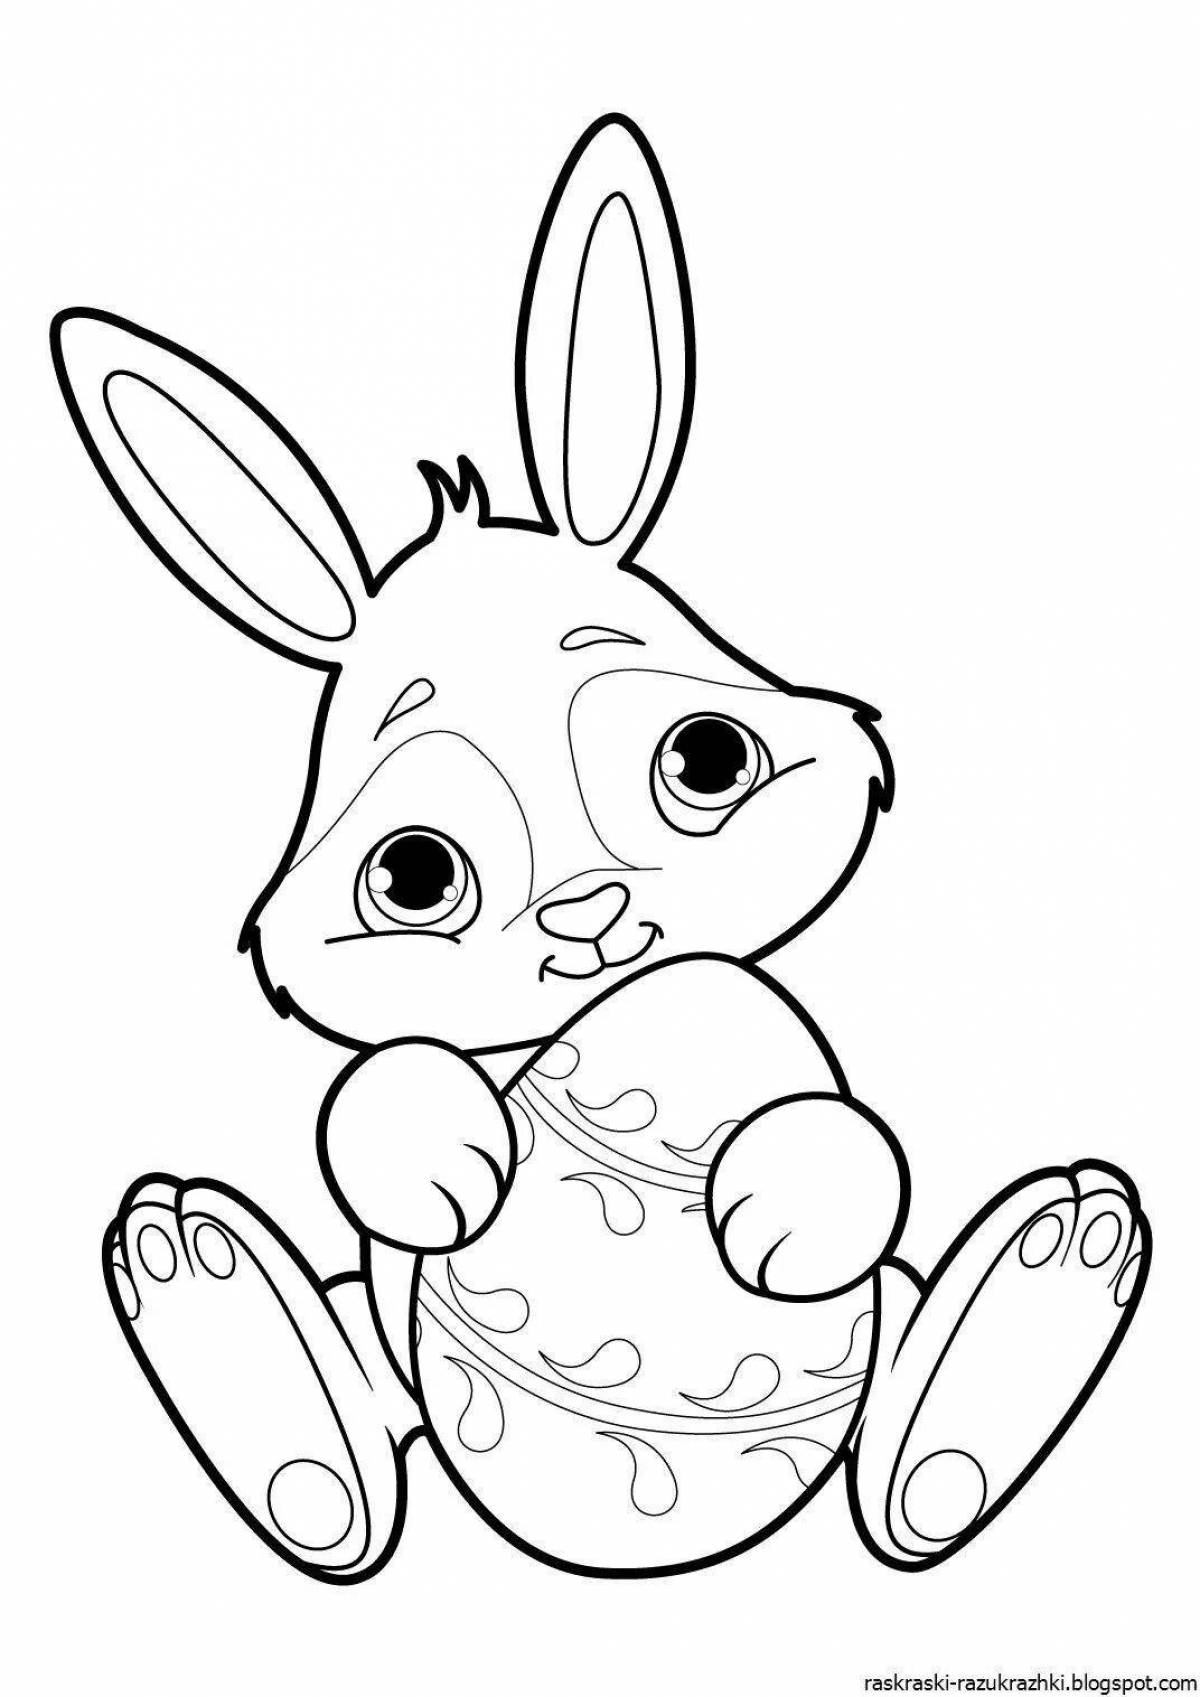 Spunky coloring page bunny для детей